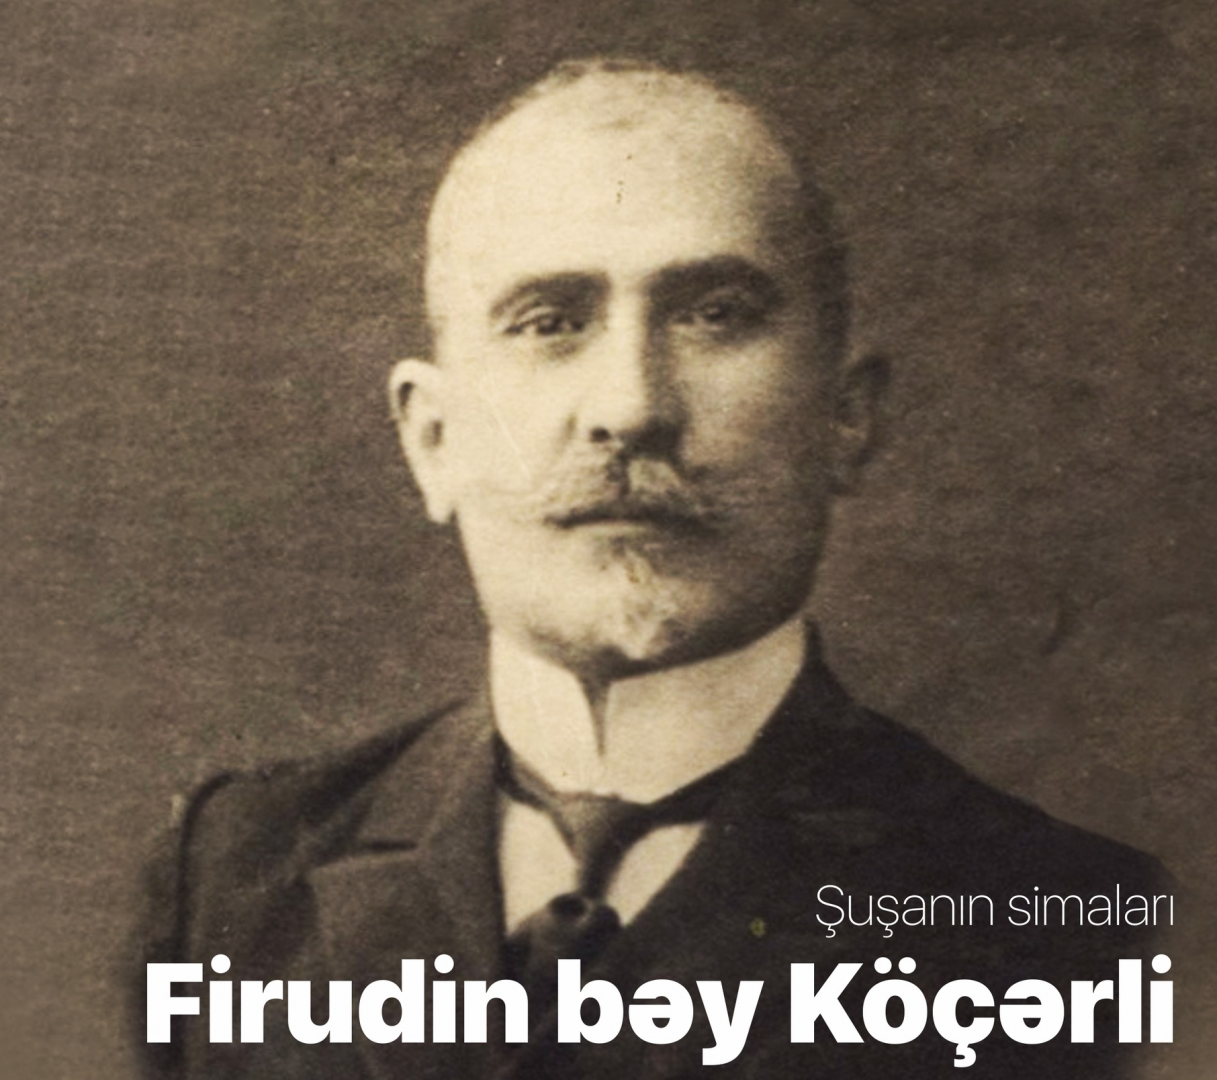 Firidun bay Kocharli: Great intellectual of Azerbaijani literary thinking